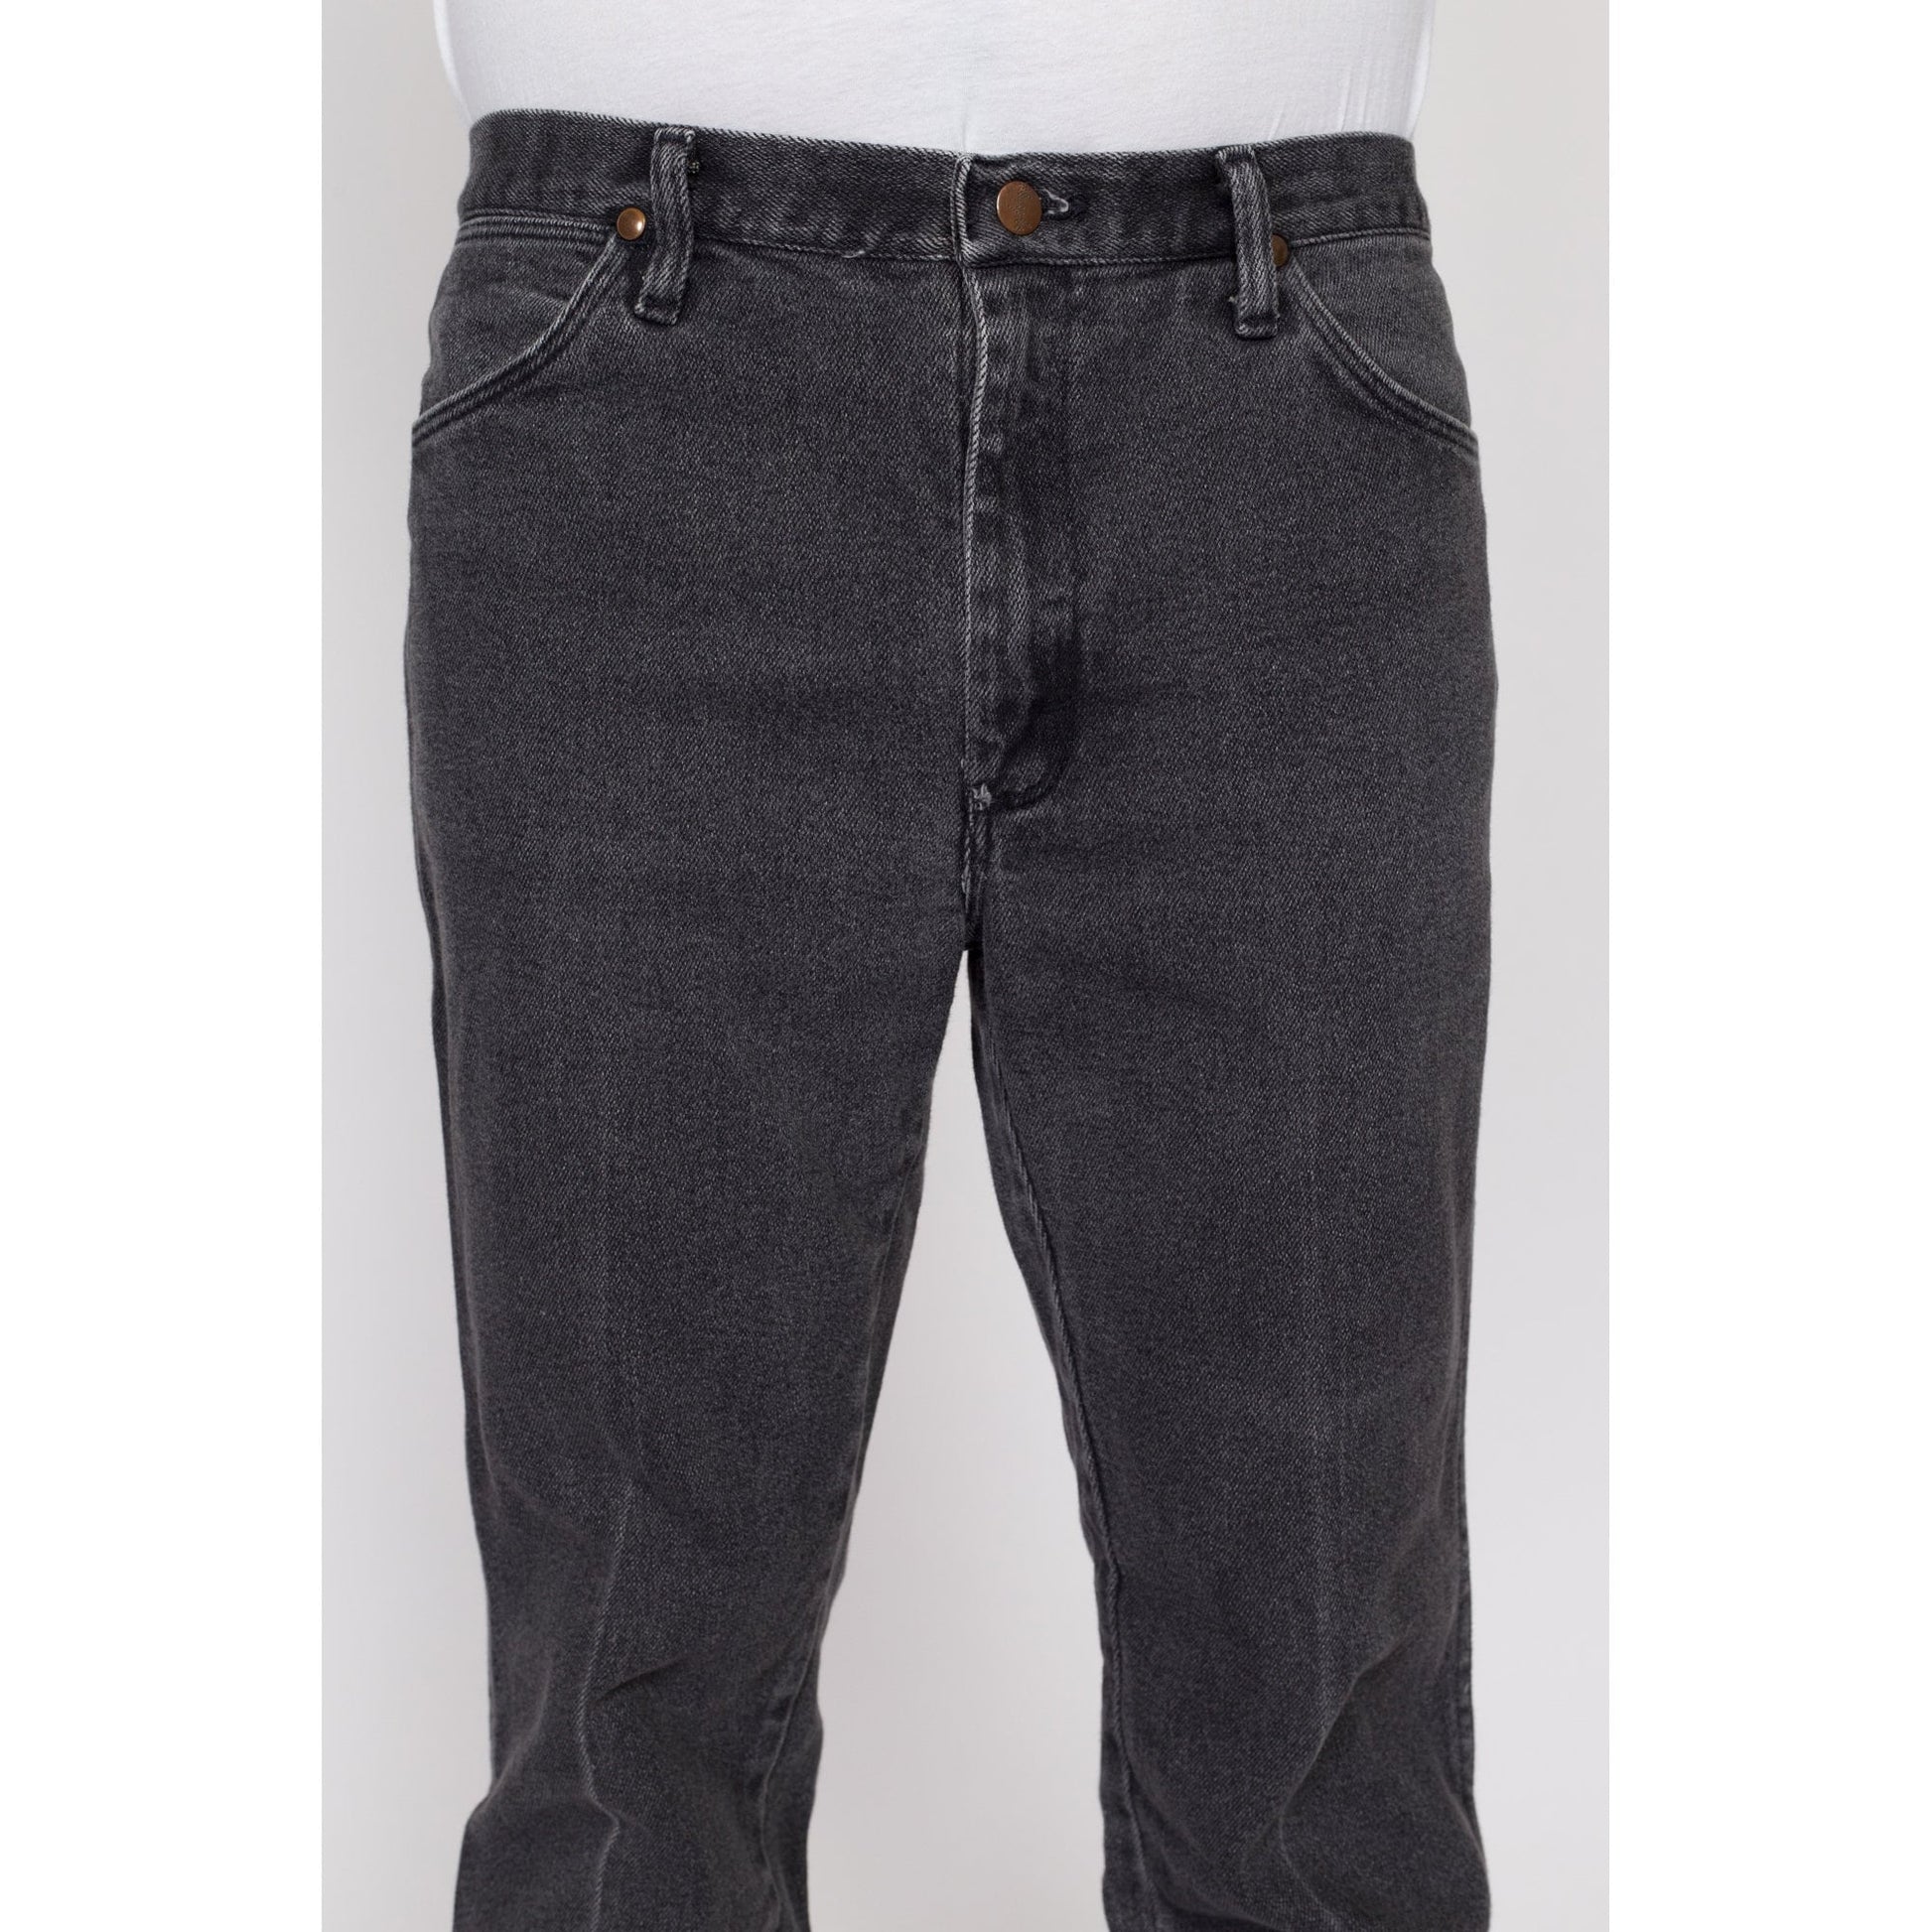 34x32 90s Wrangler Faded Black Jeans | Vintage Stretchy Denim Straight Leg Jeans